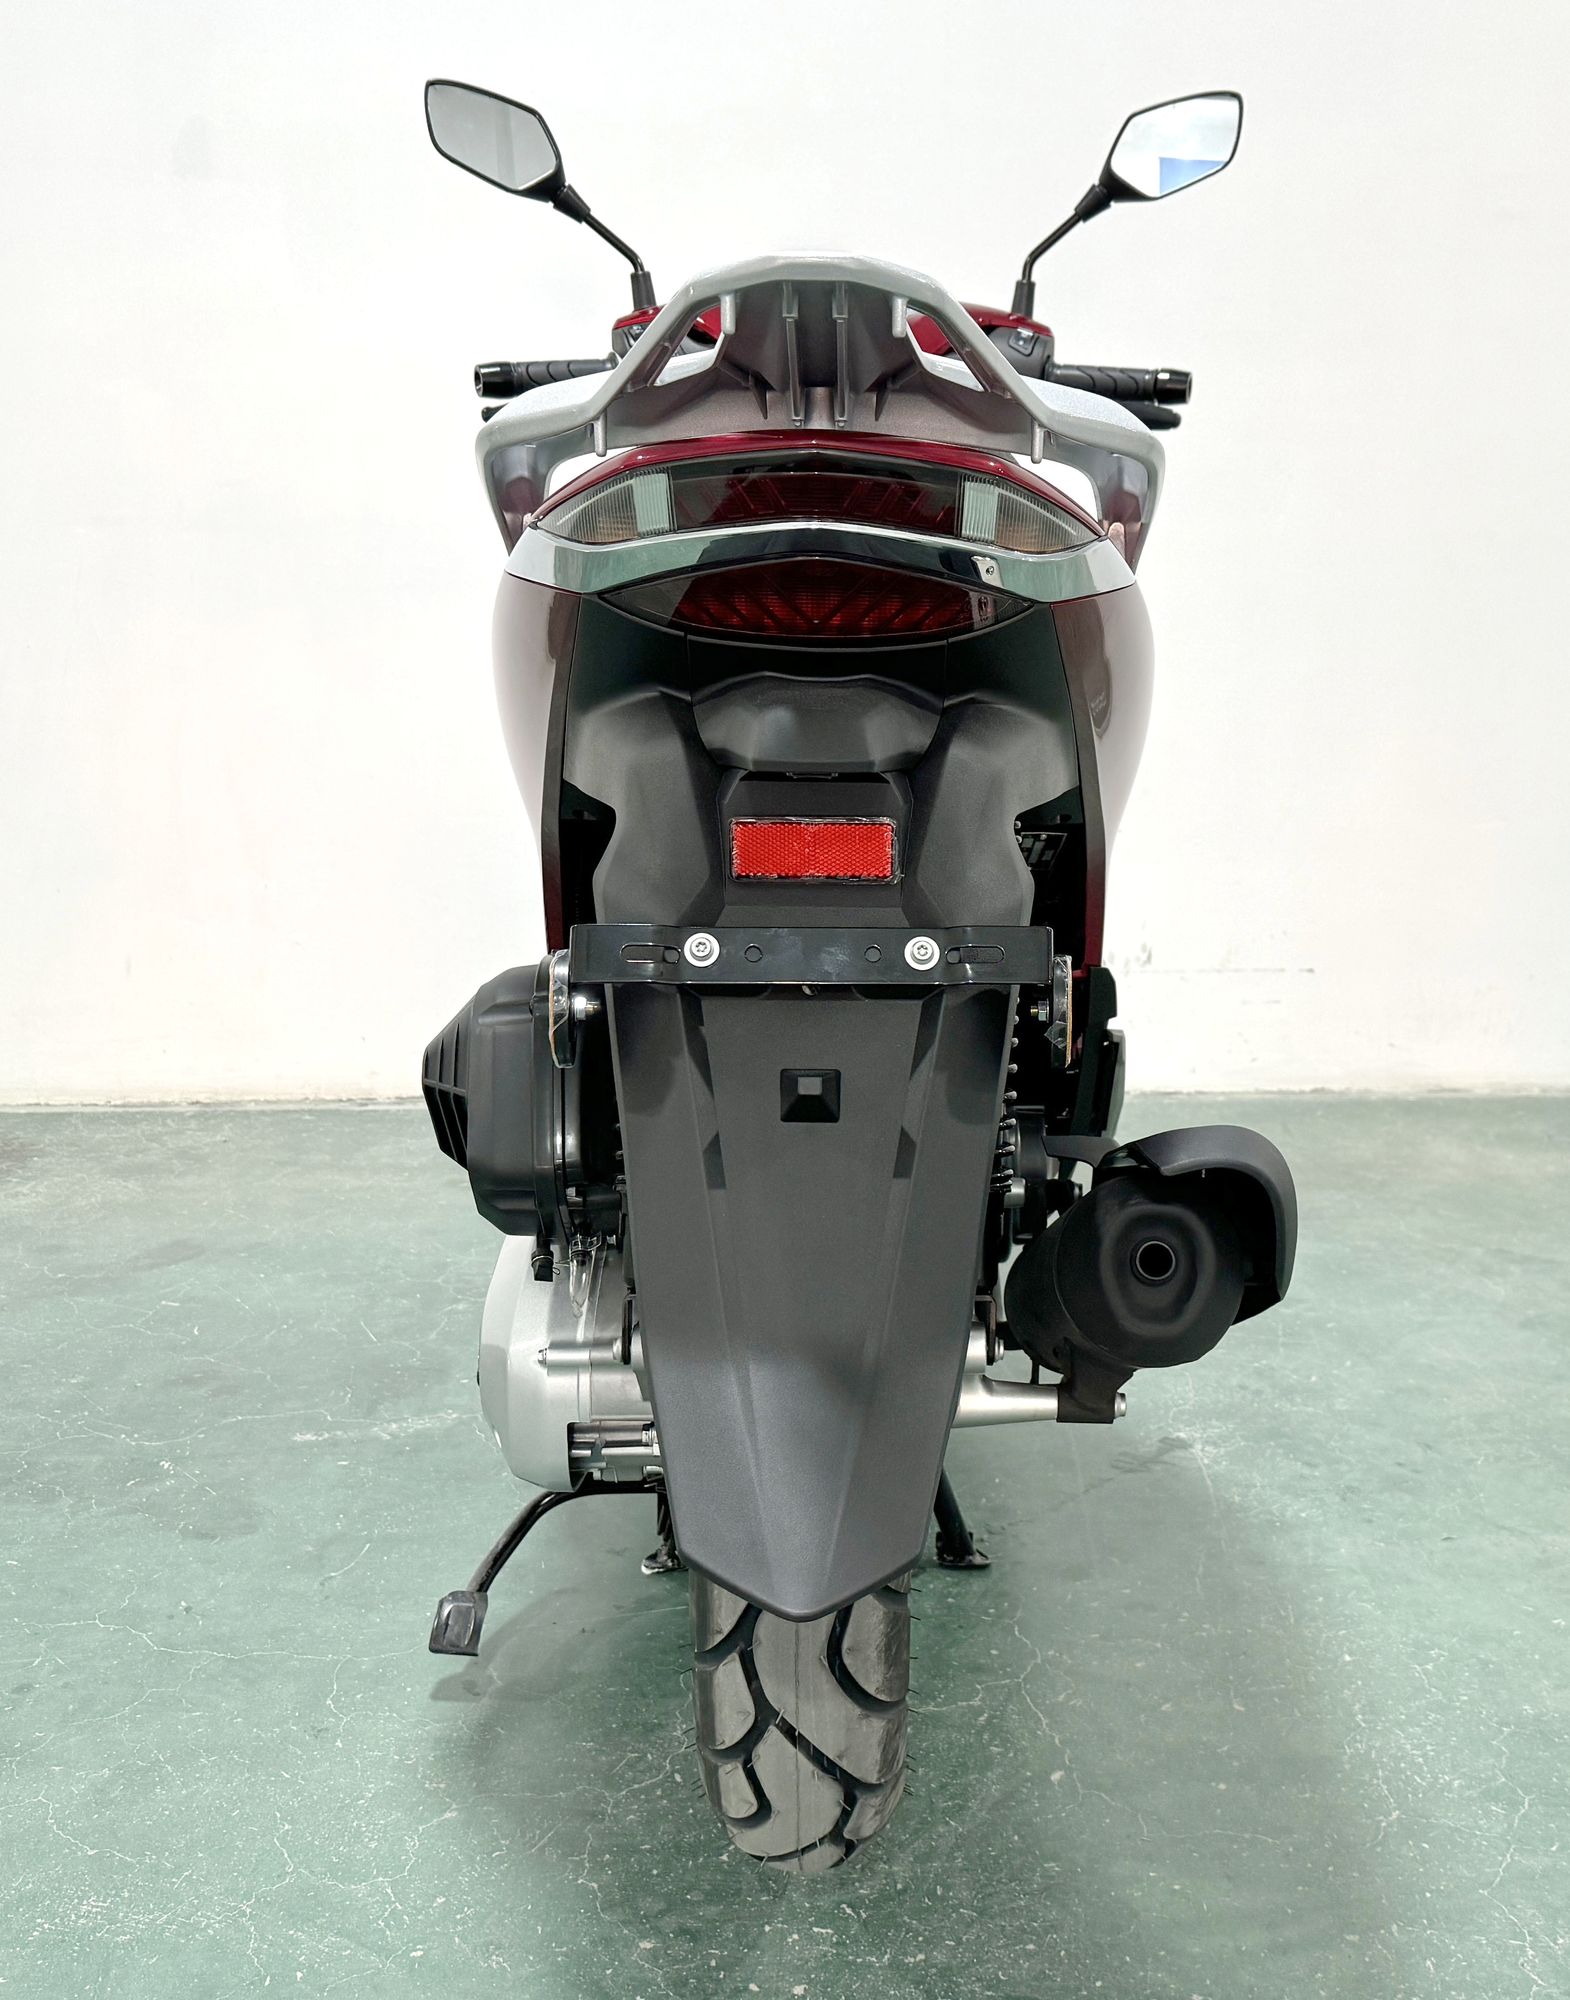 Скутер Motosuper SH Red (красный)